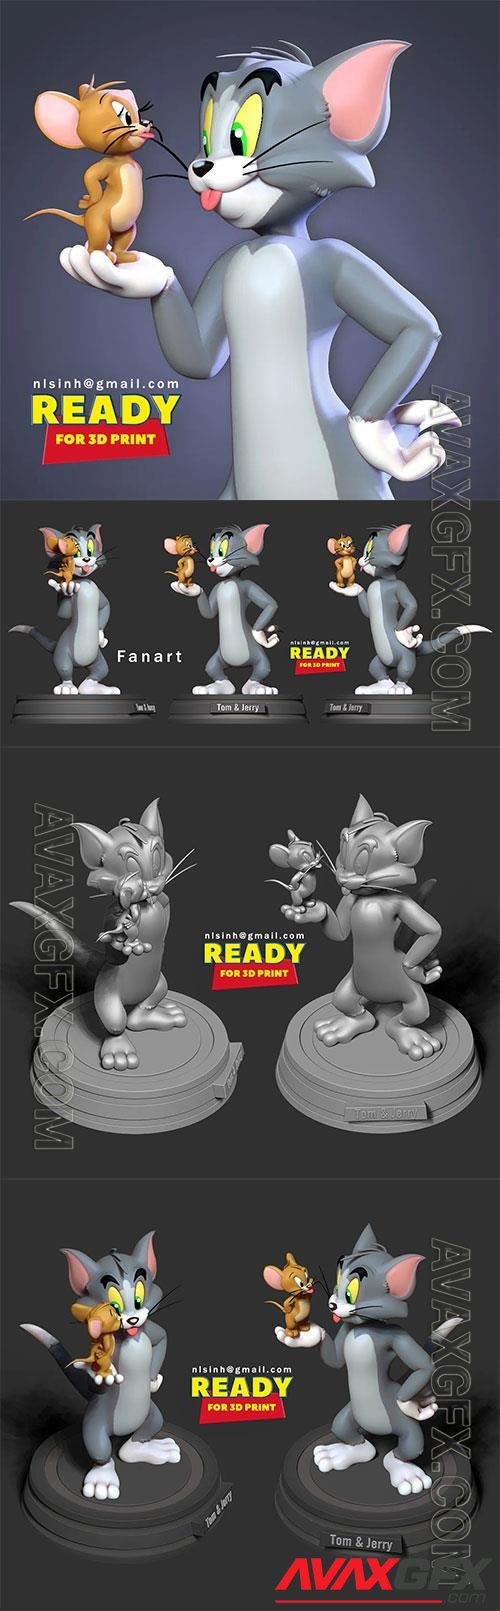 Tom & Jerry 3D Print